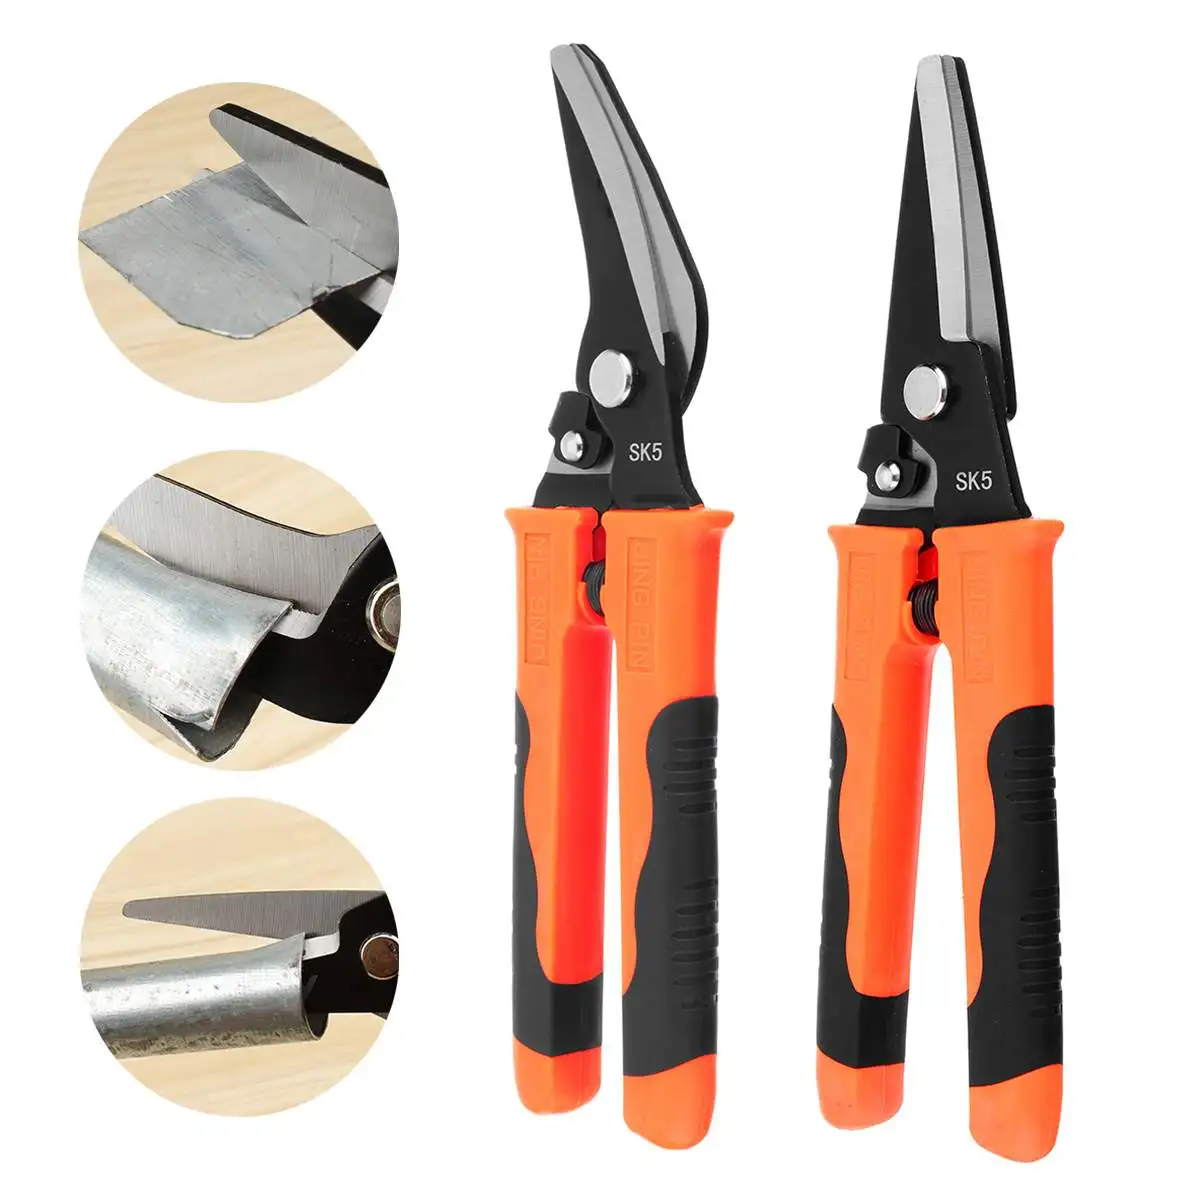 

8 Inch SK5 Metal Snip Aviation Scissor Kitchentool Cut Shear Household Scissors Industrial Cutter DIY Handheld Cutting Tools